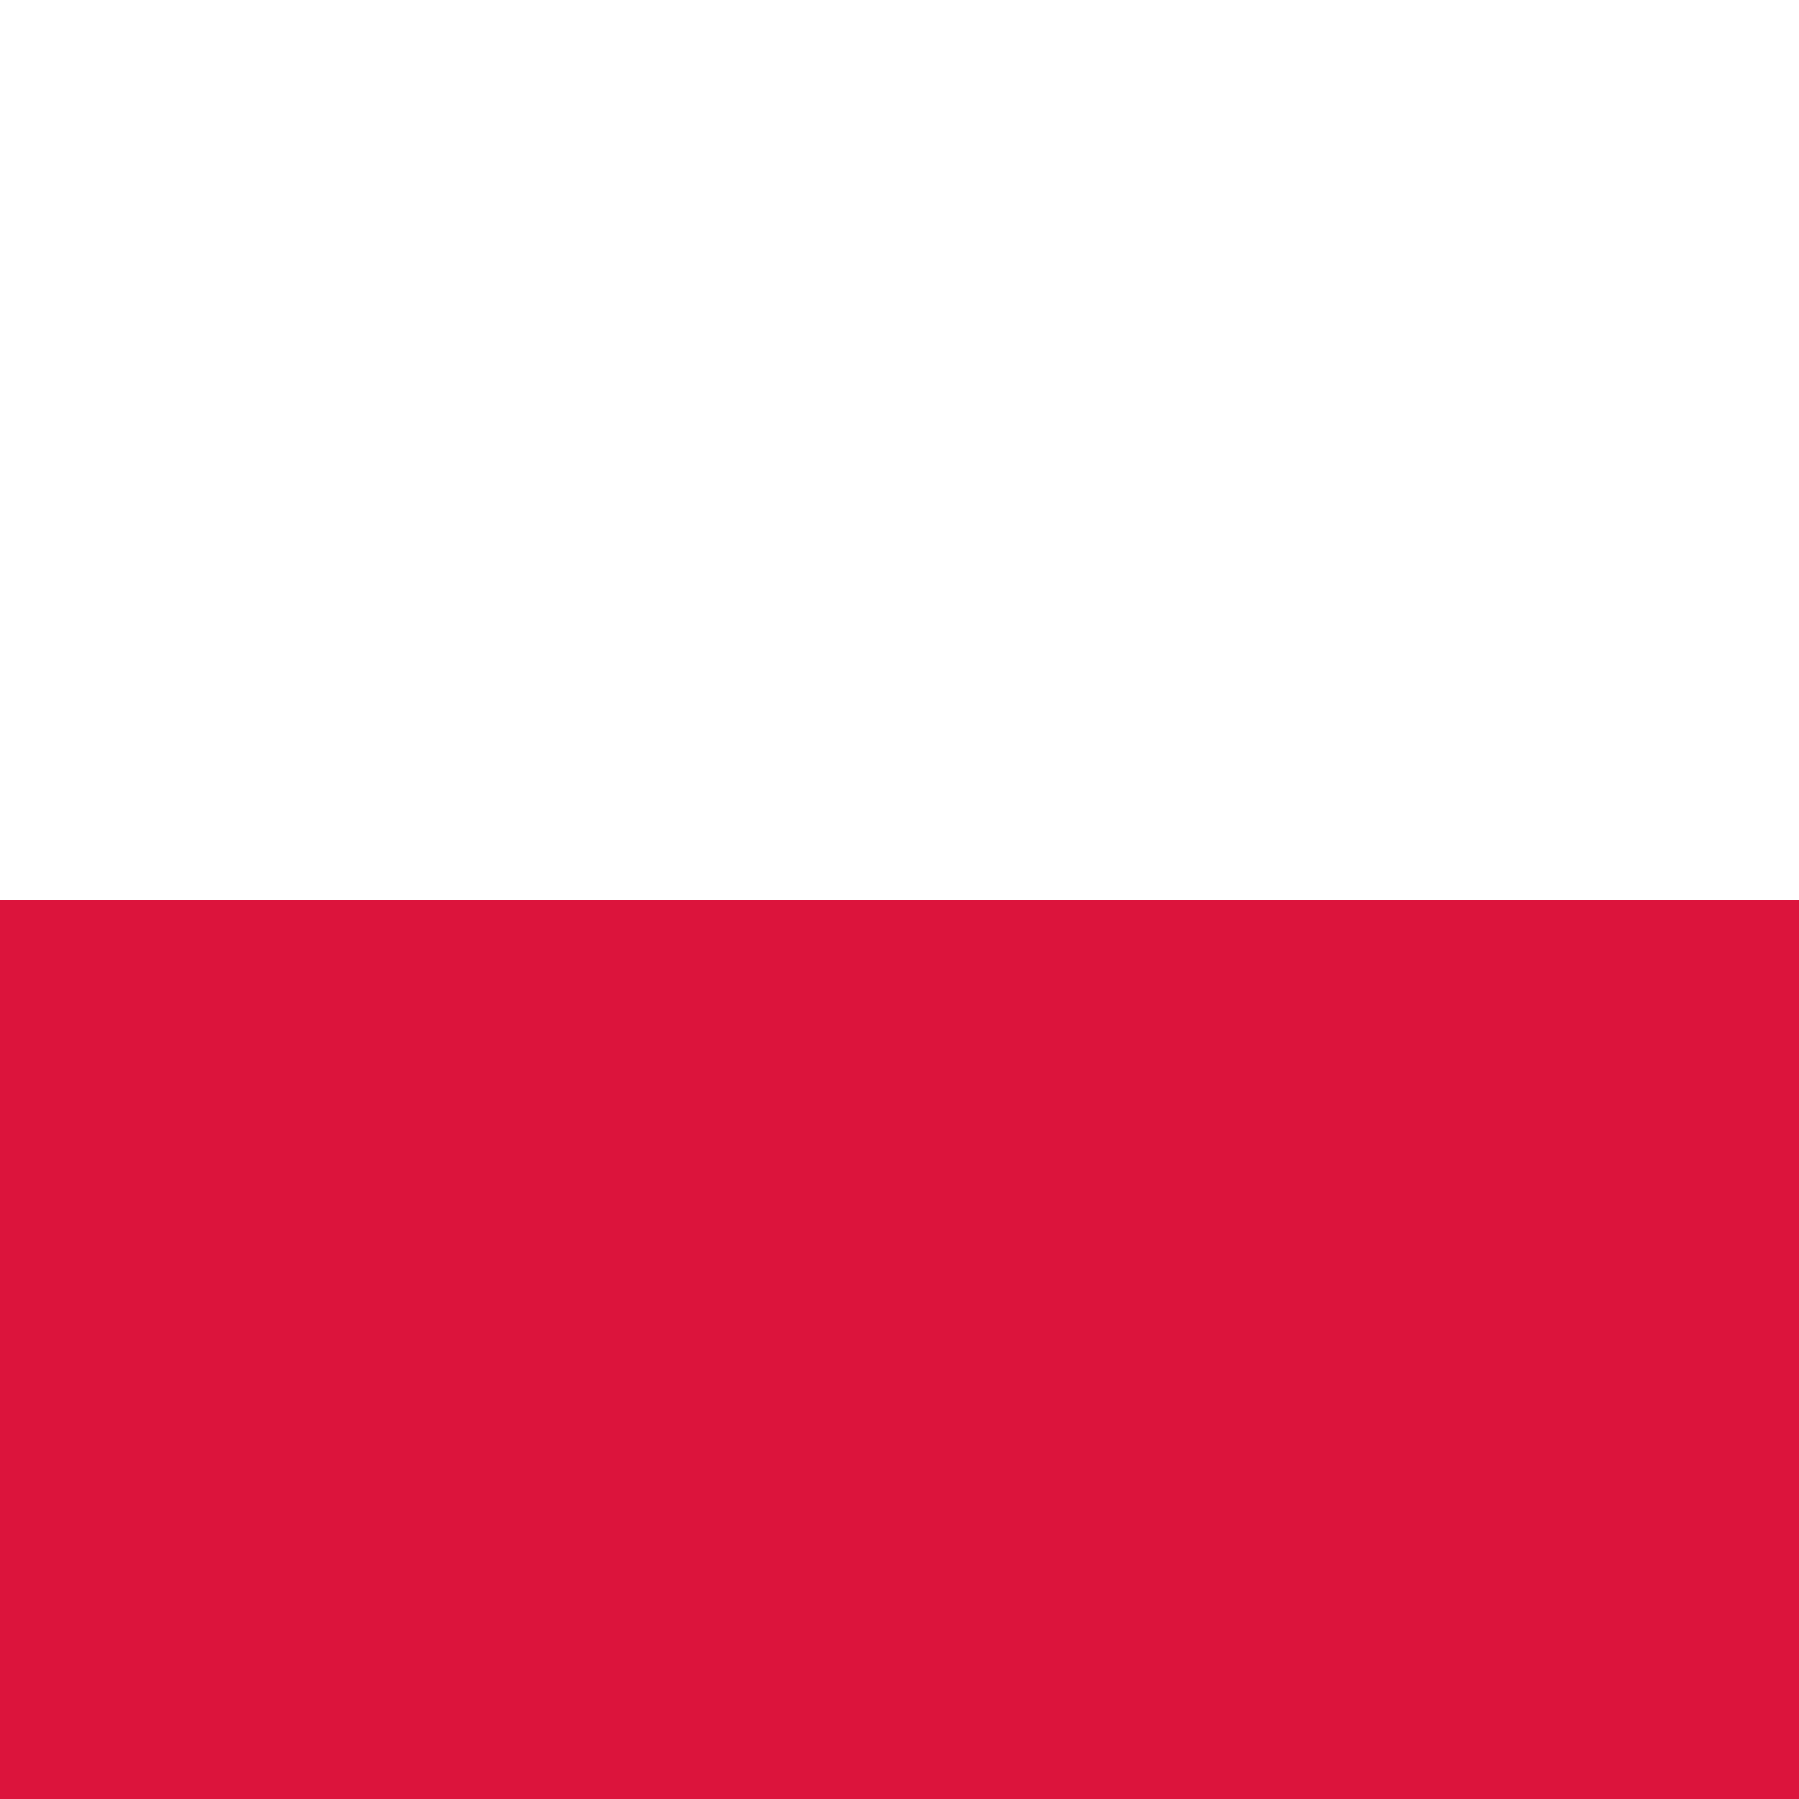 2880px-Flag_of_Poland.svg